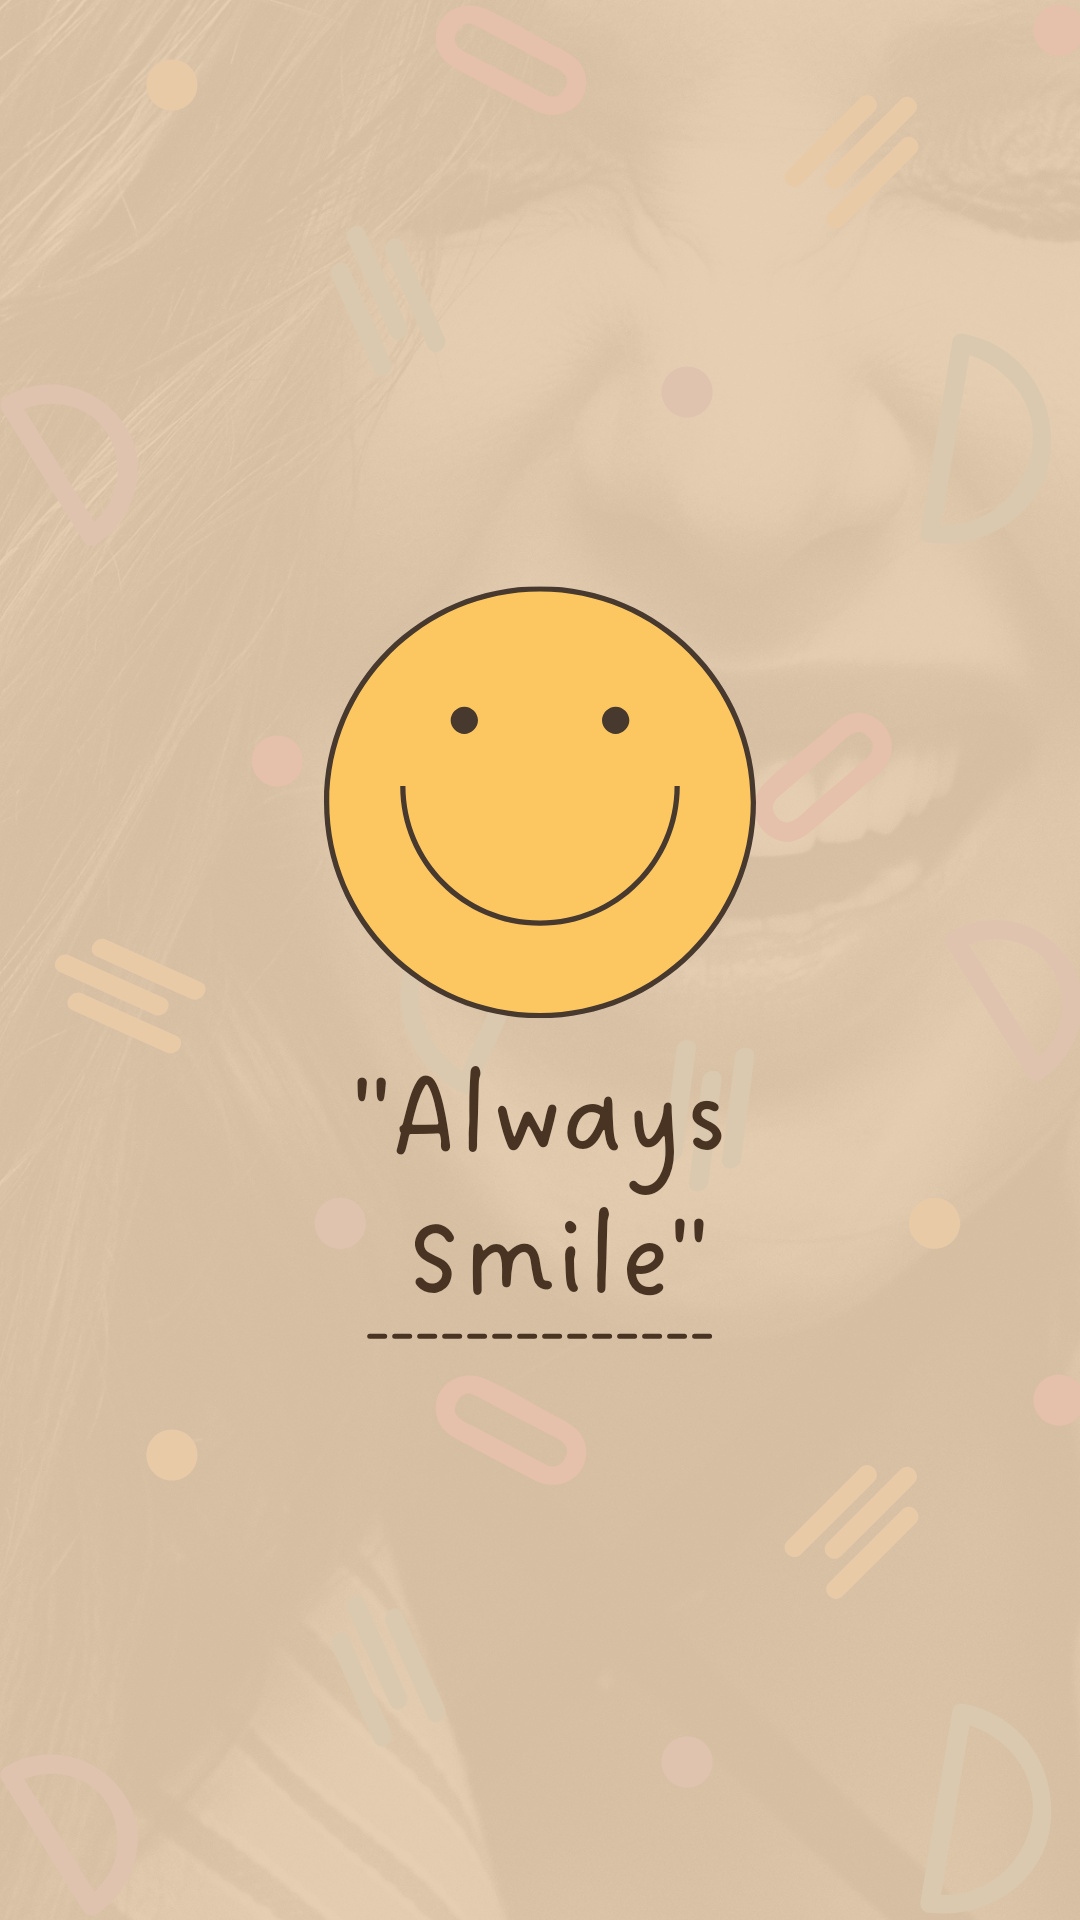 Smile Wala - Yellow Emoticon